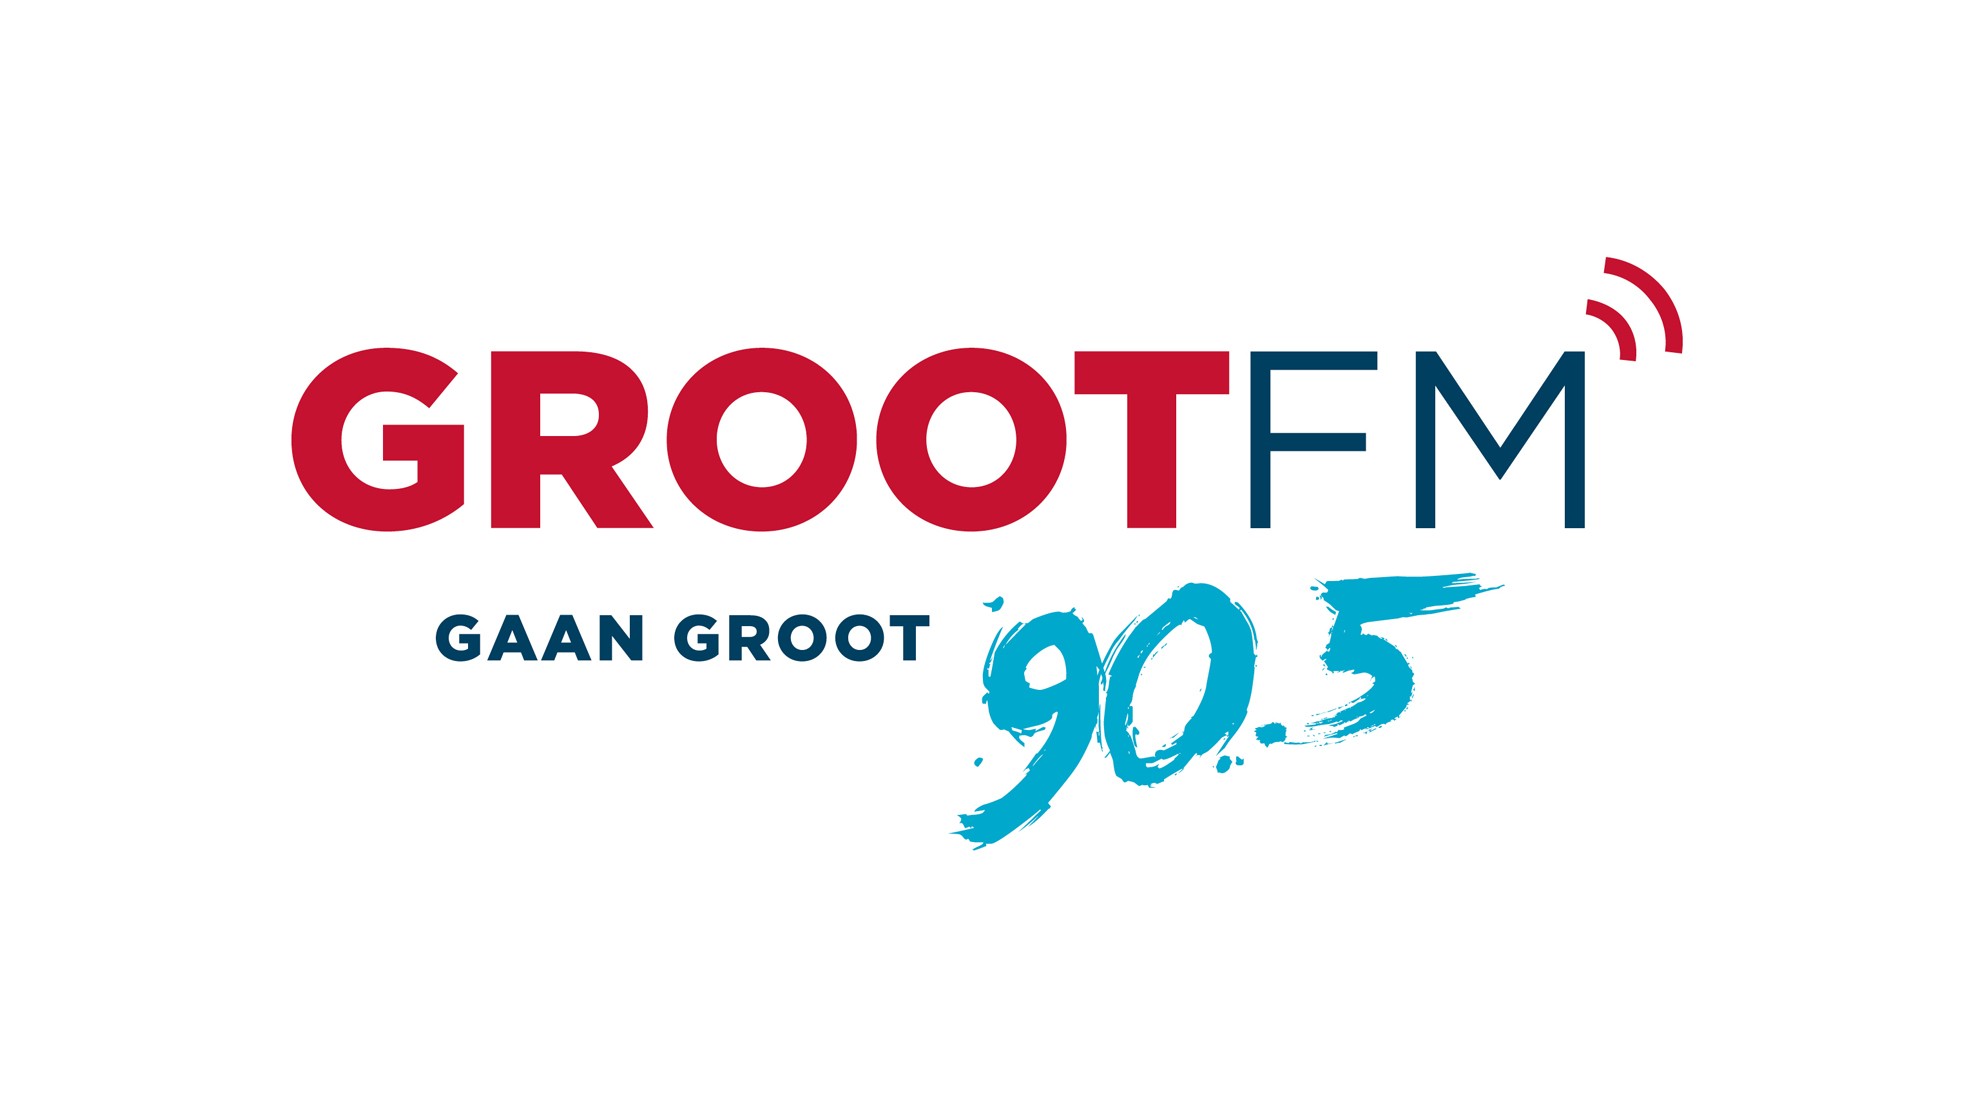 GROOT FM 90.5 RADIO STATION 360° VIDEO